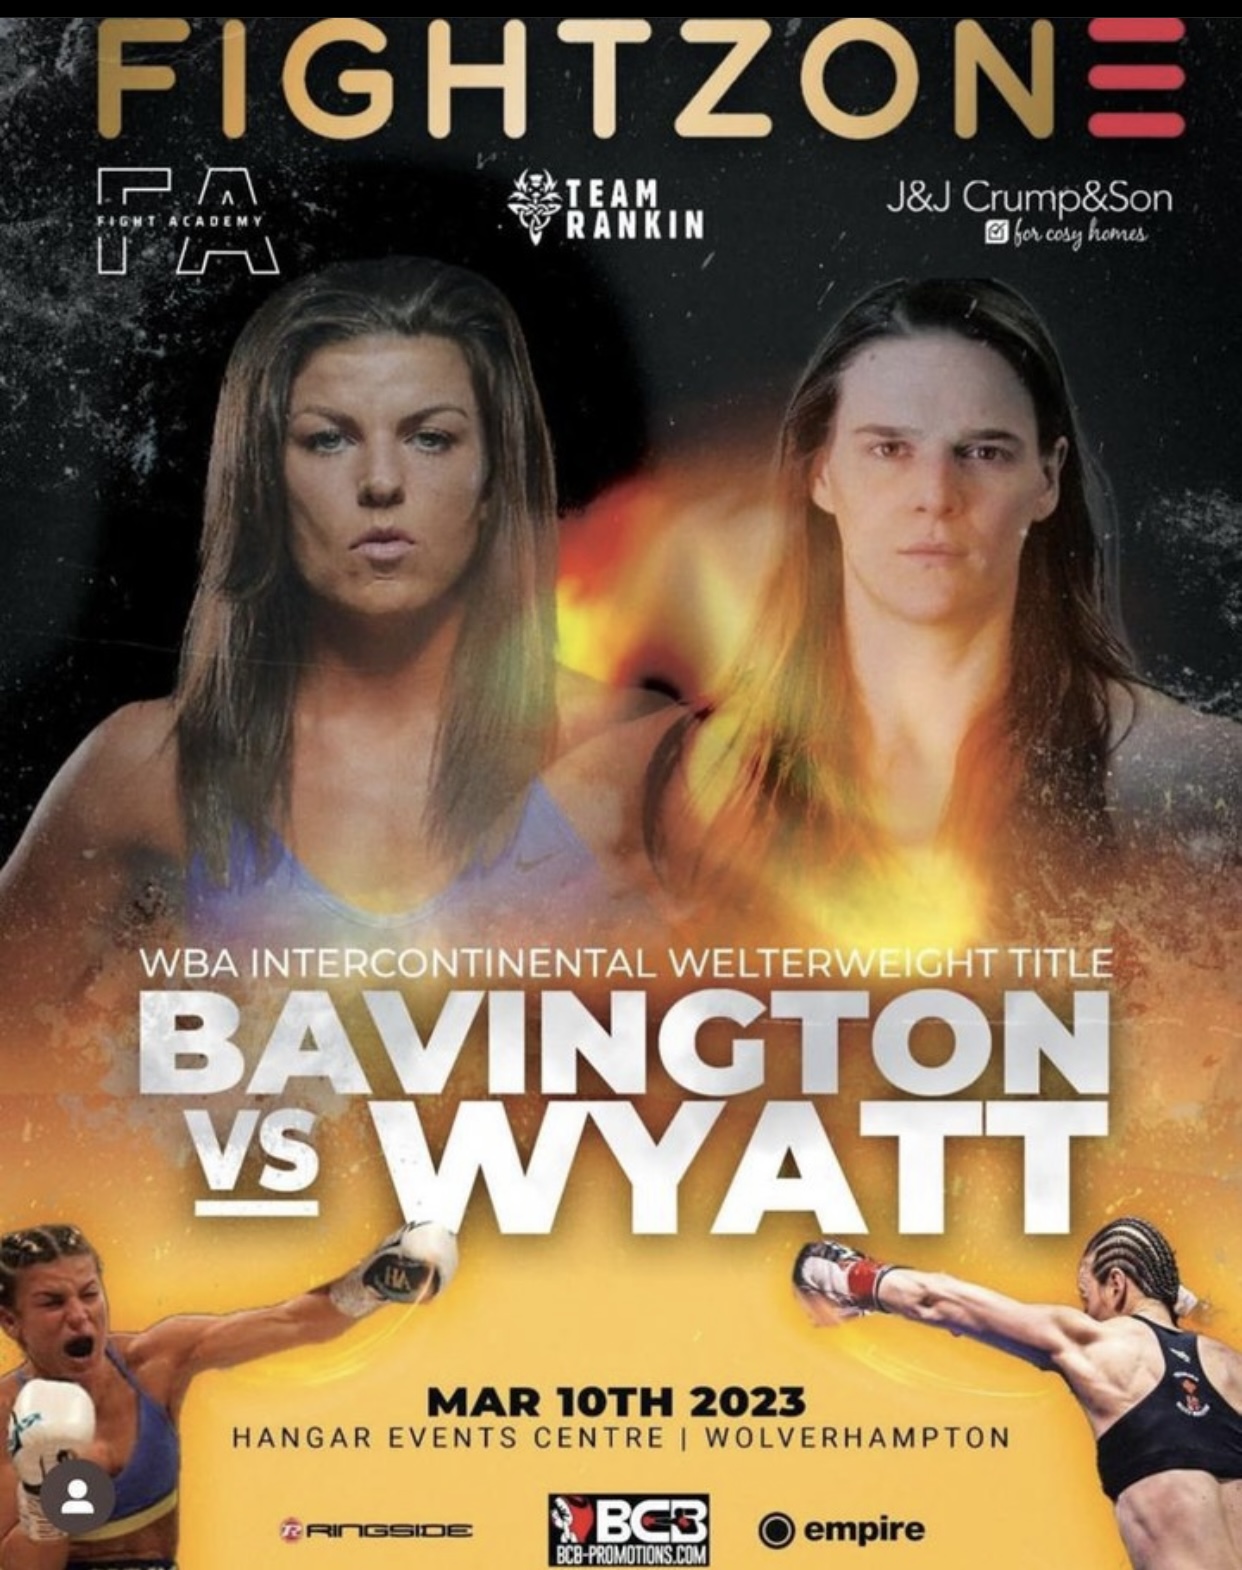 Bavington to face Wyatt on March 10